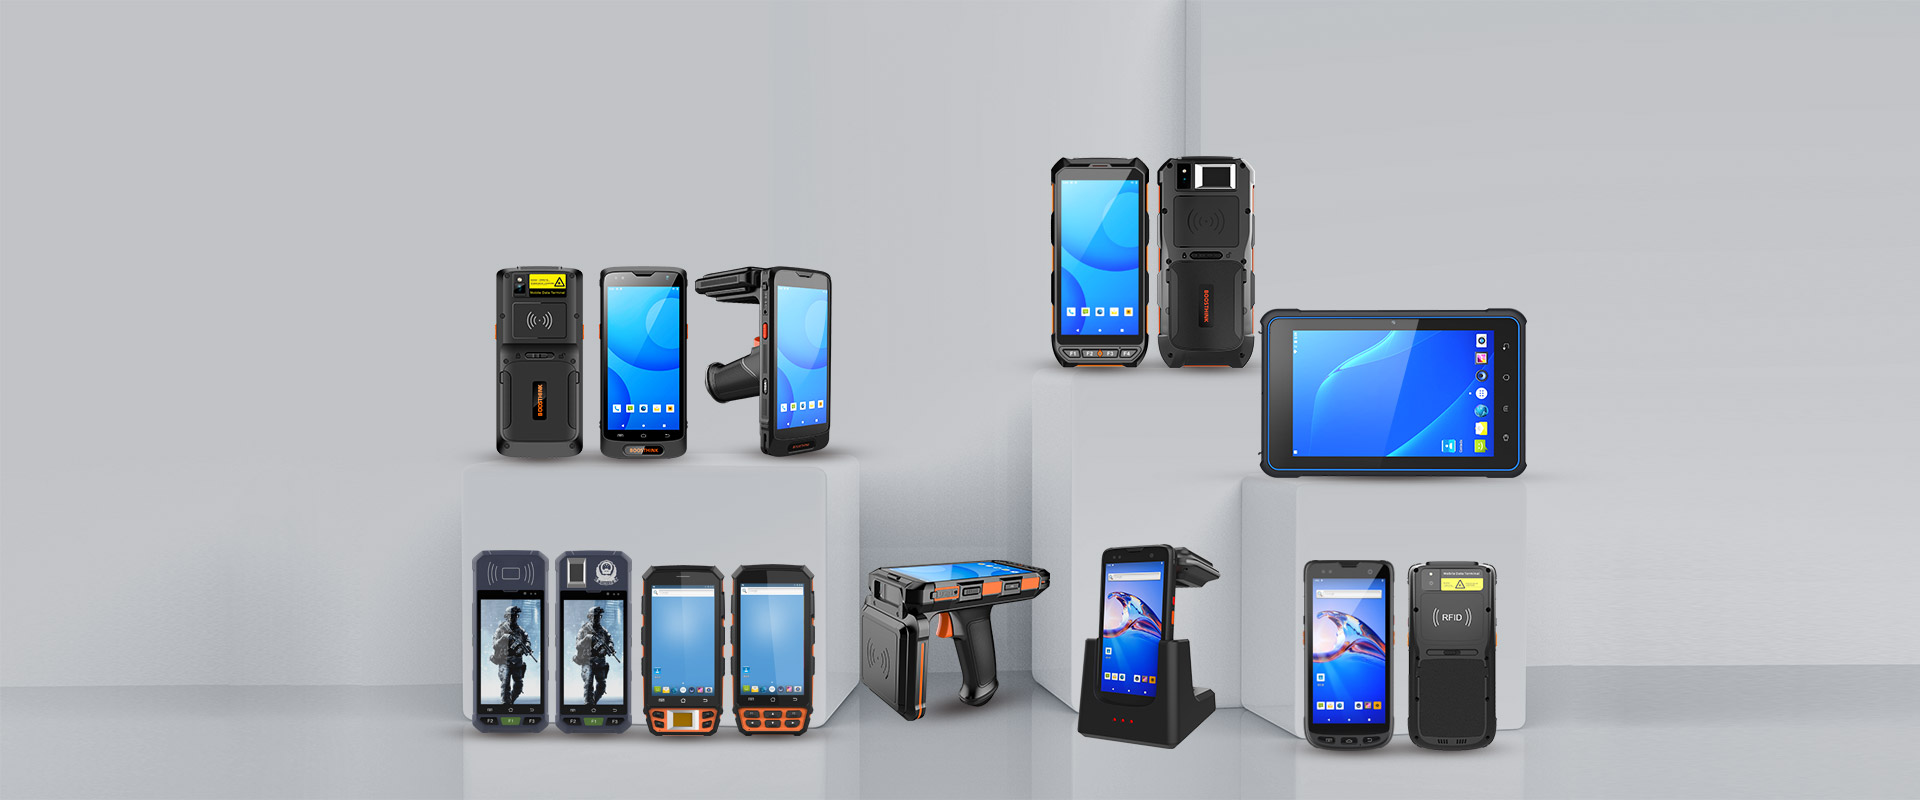 Shenzhen Handheld-Wireless Technology Co., Ltd, ለተለያዩ አፕሊኬሽኖች እና አጠቃቀሞች የተለያዩ የኦንዲኦይድ RFID ወይም ባርኮድ አንባቢዎችን ያቀርባል።